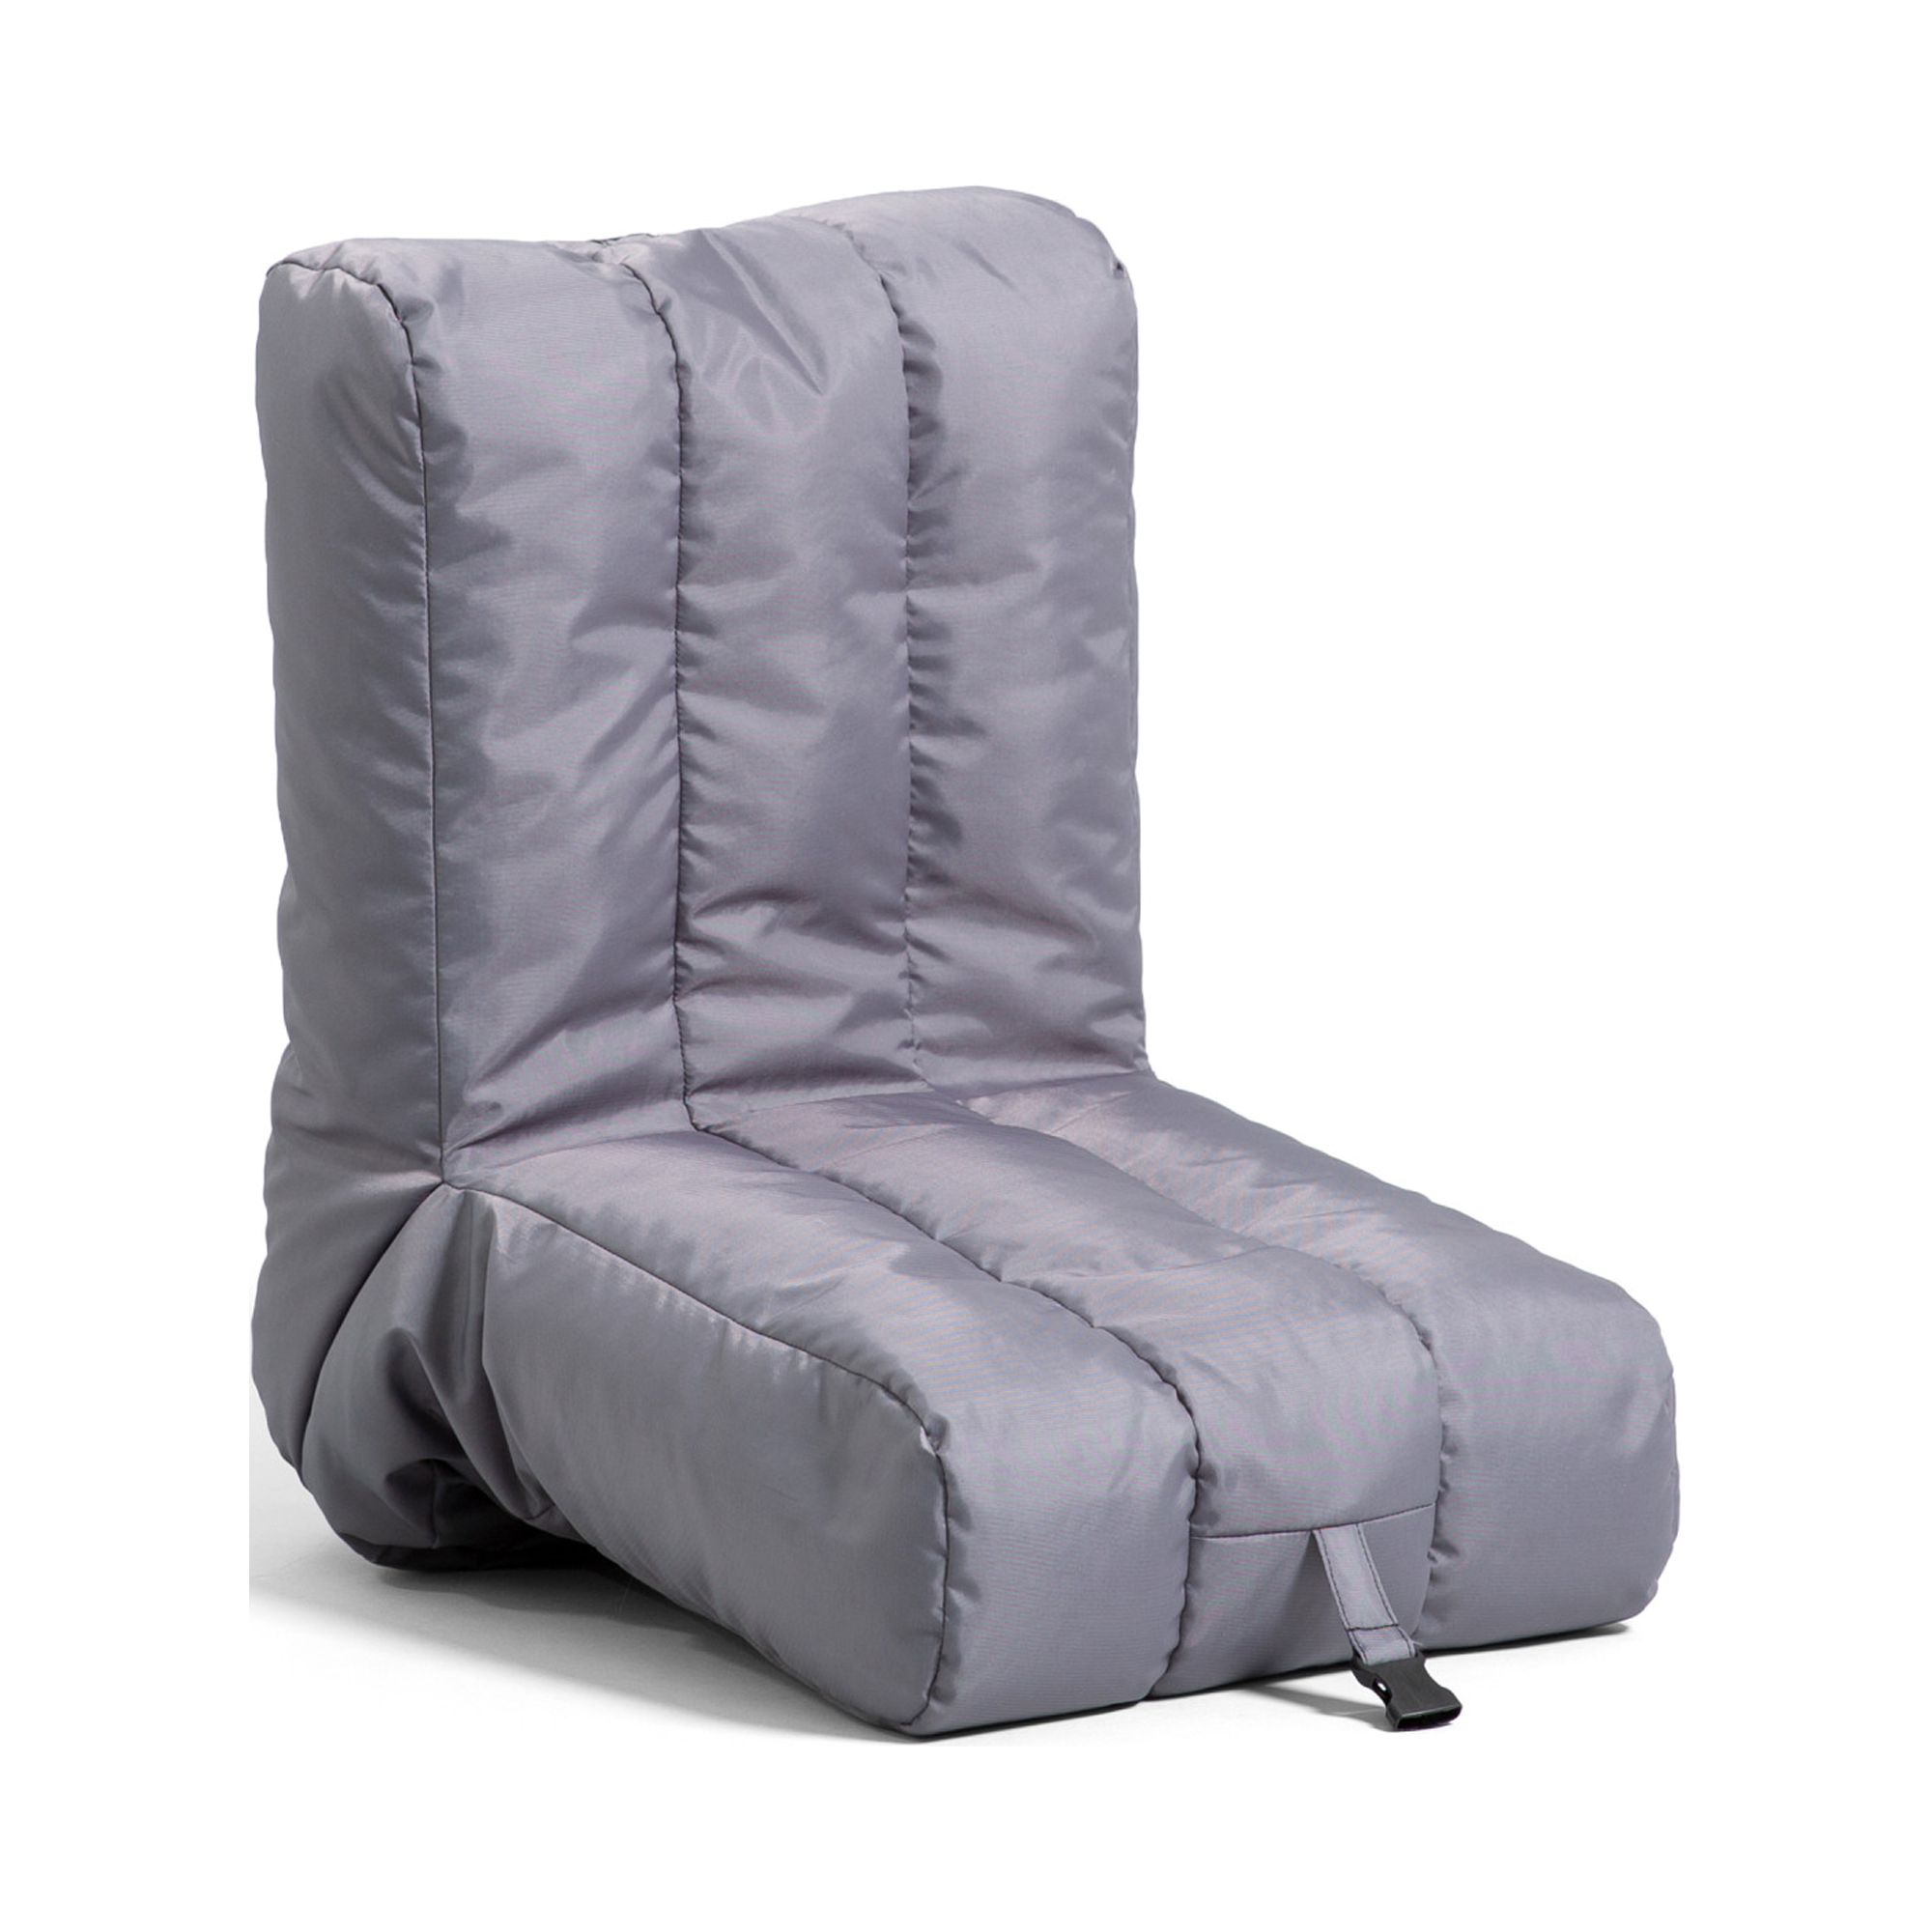 Big Joe Grab & Go Travel Bean Bag Chair, Steel Gray SmartMax, Durable Polyester Nylon Blend, 1.5 feet - image 2 of 9